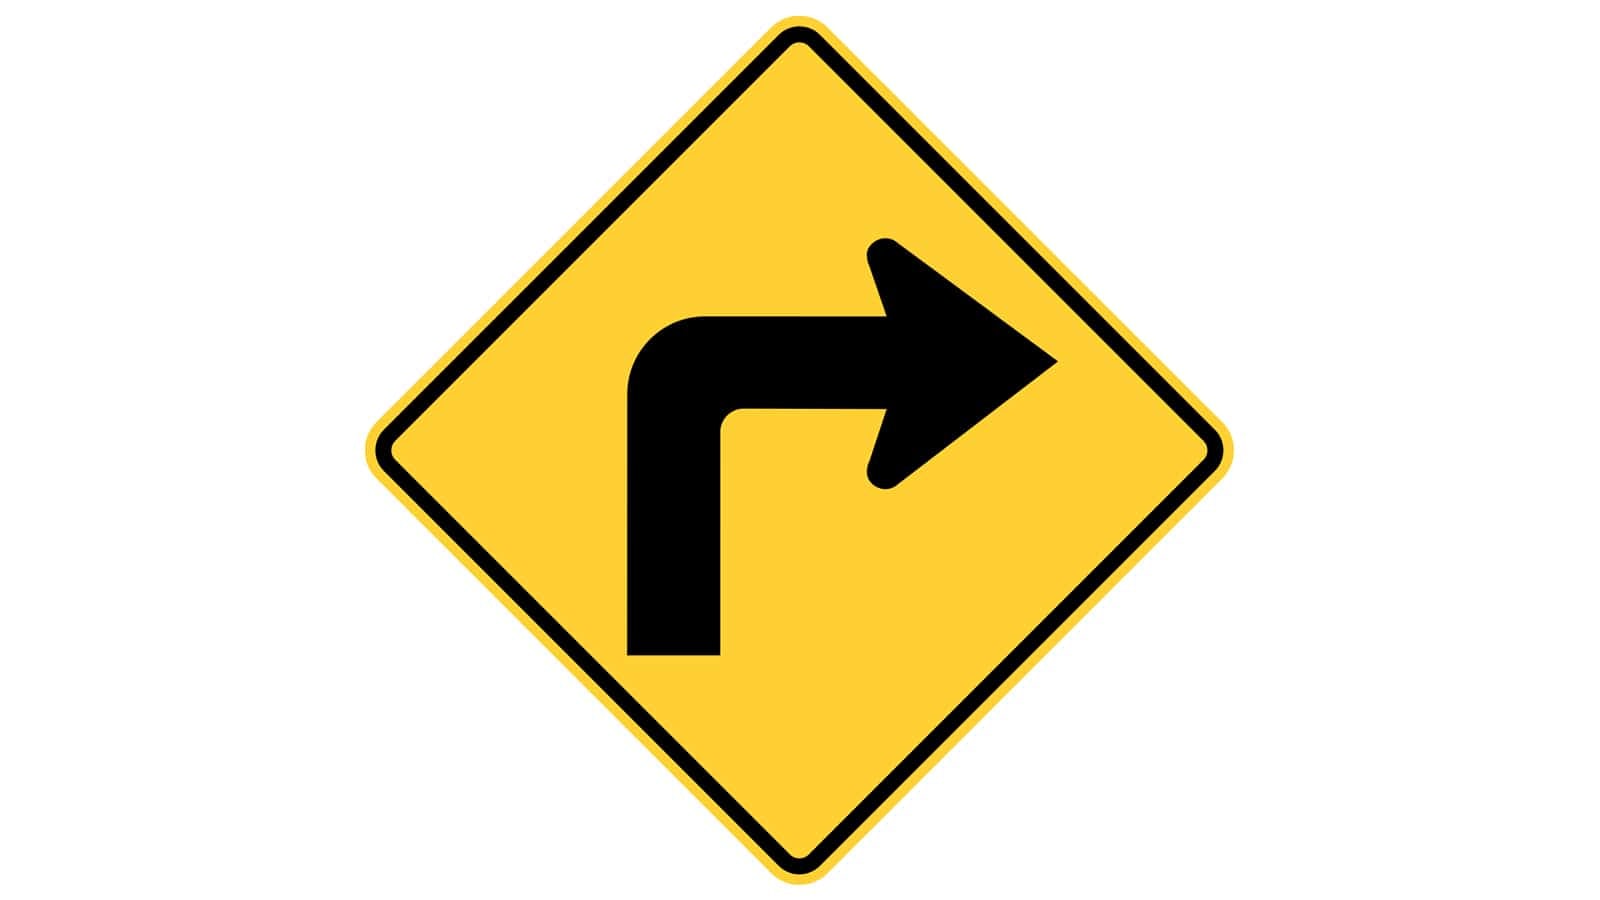 Warning sign turn right